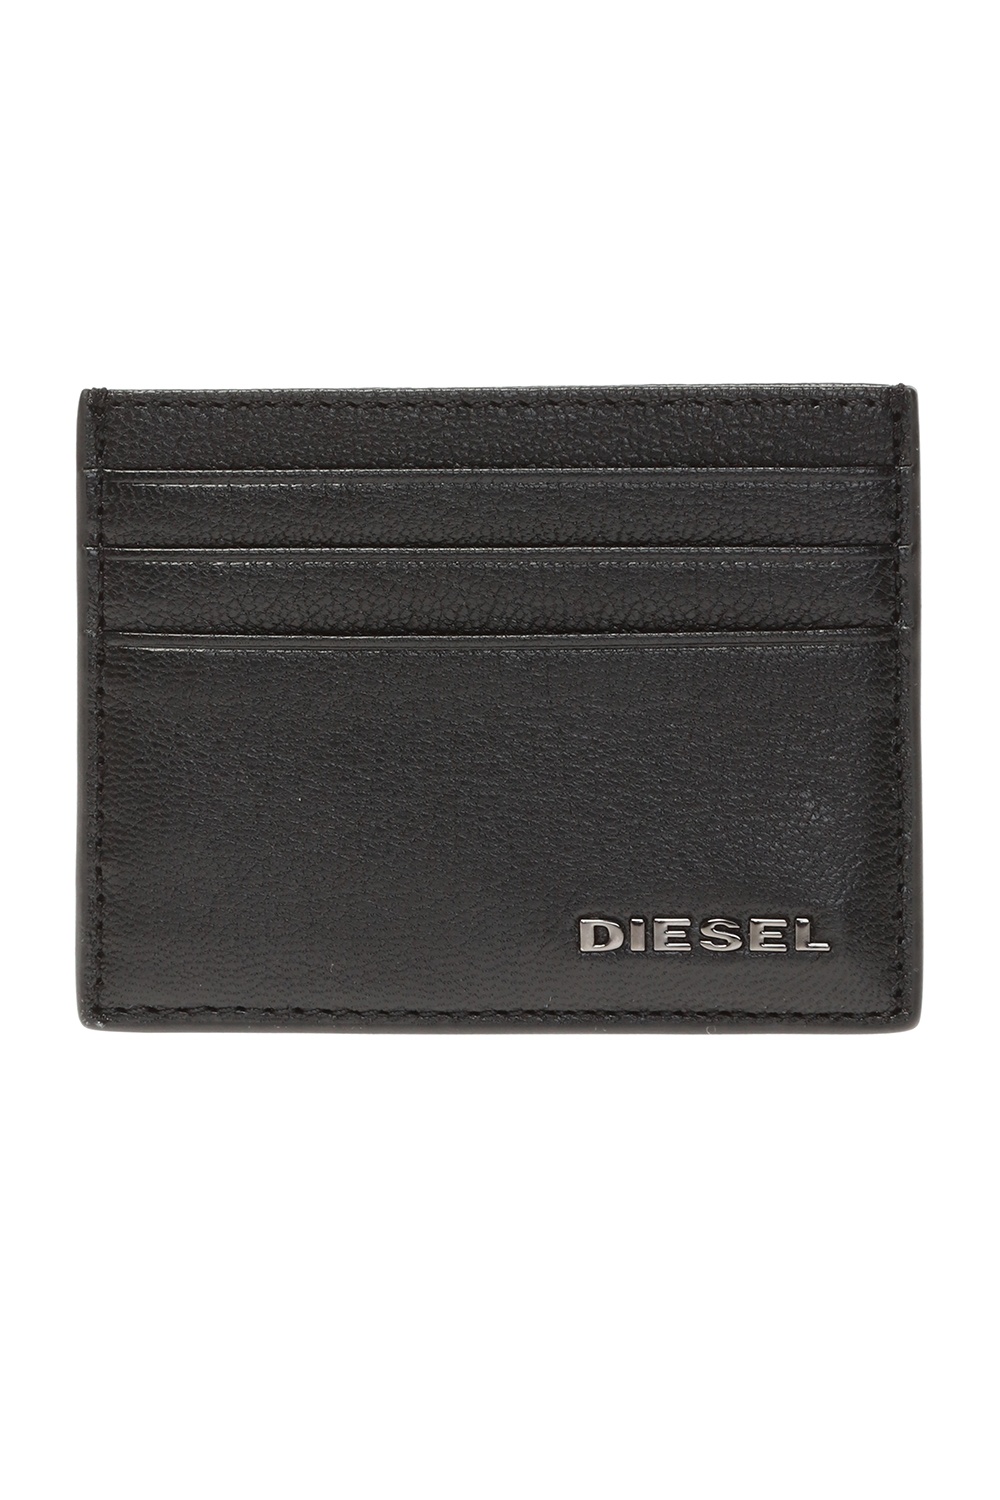 Diesel ‘Johnas II’ card case with logo